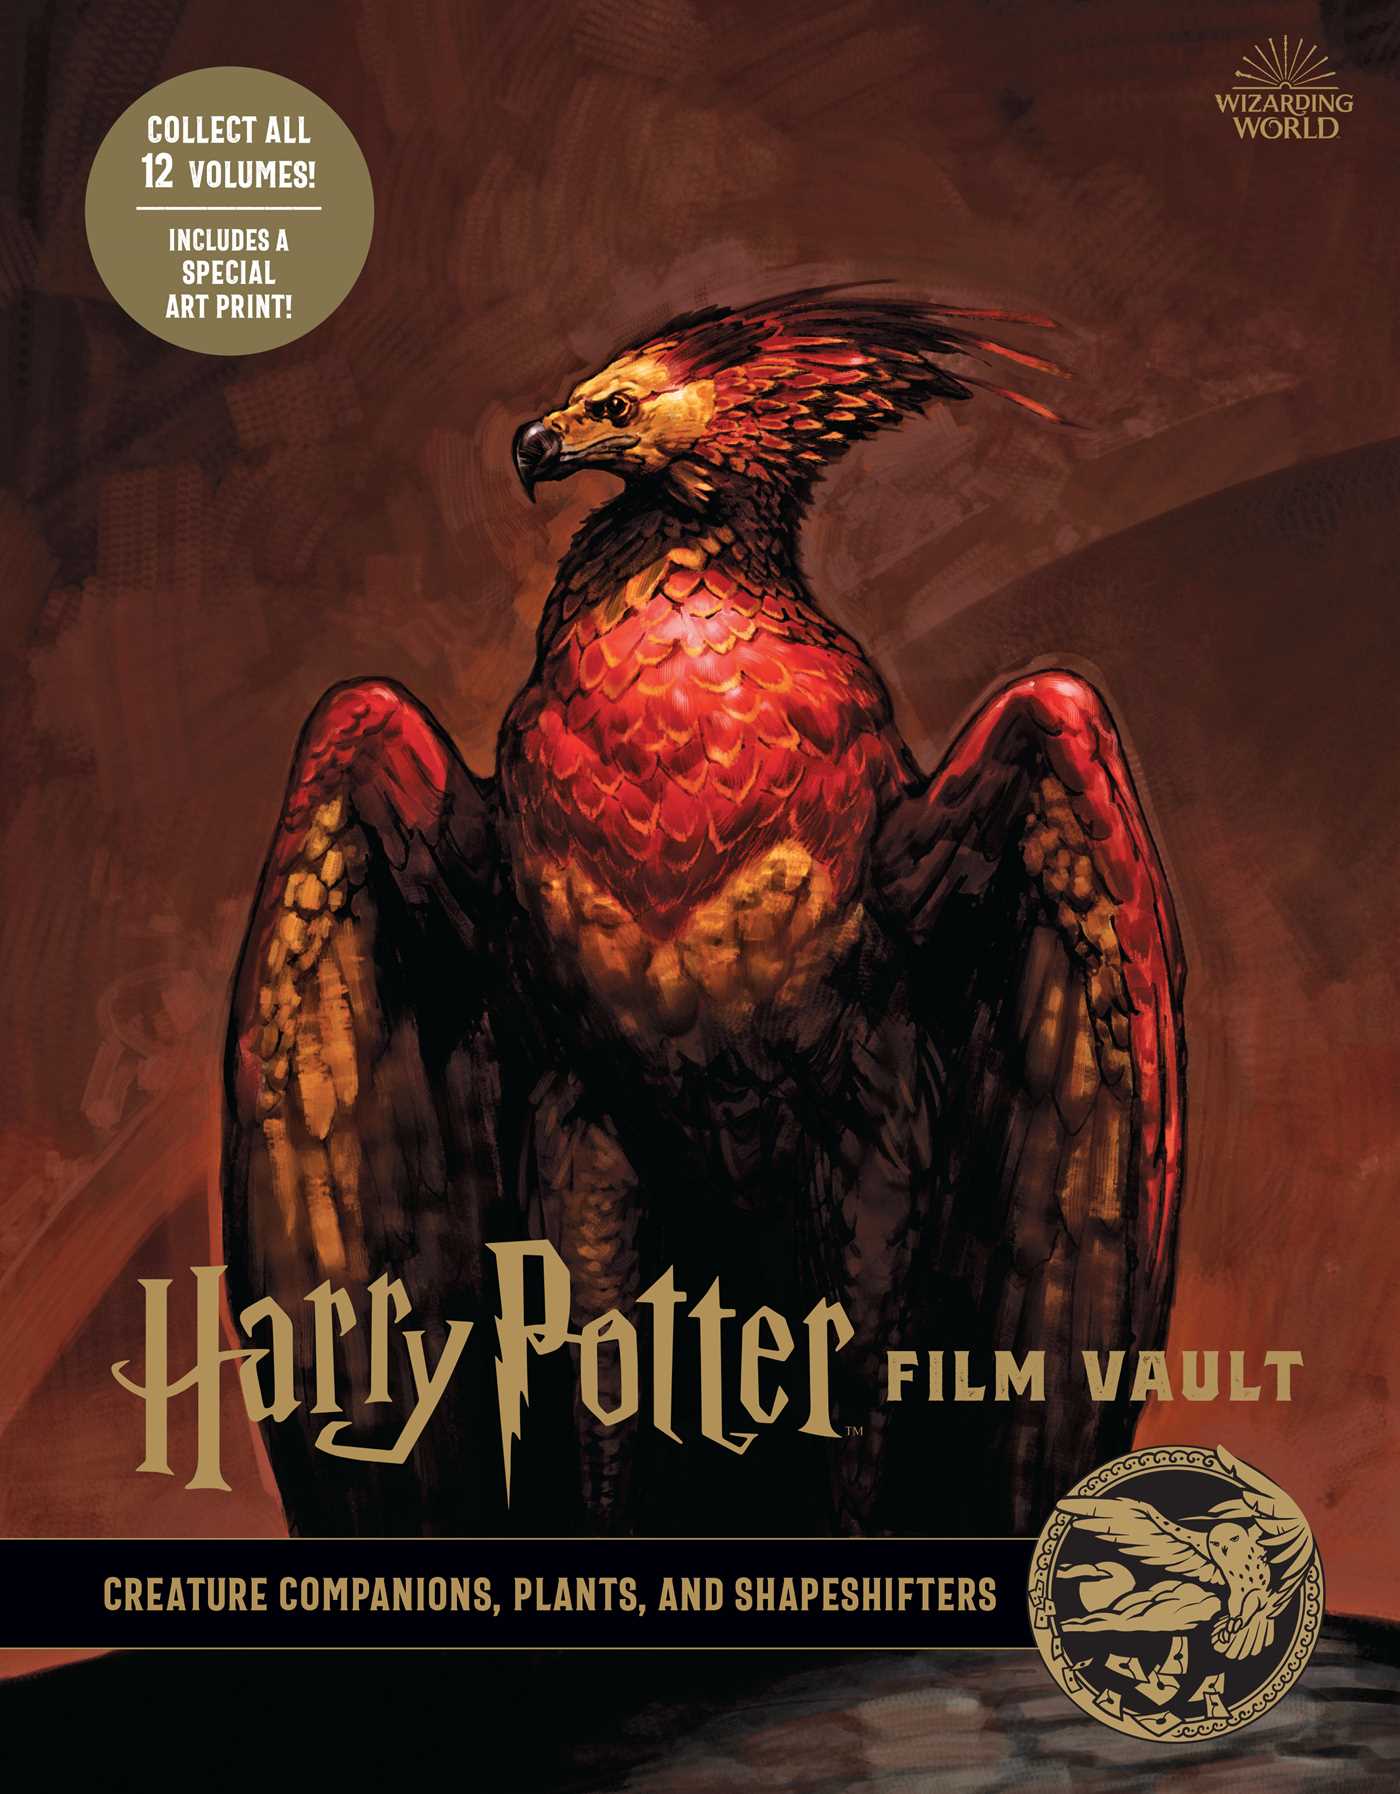 "Harry Potter" Film Vault Series